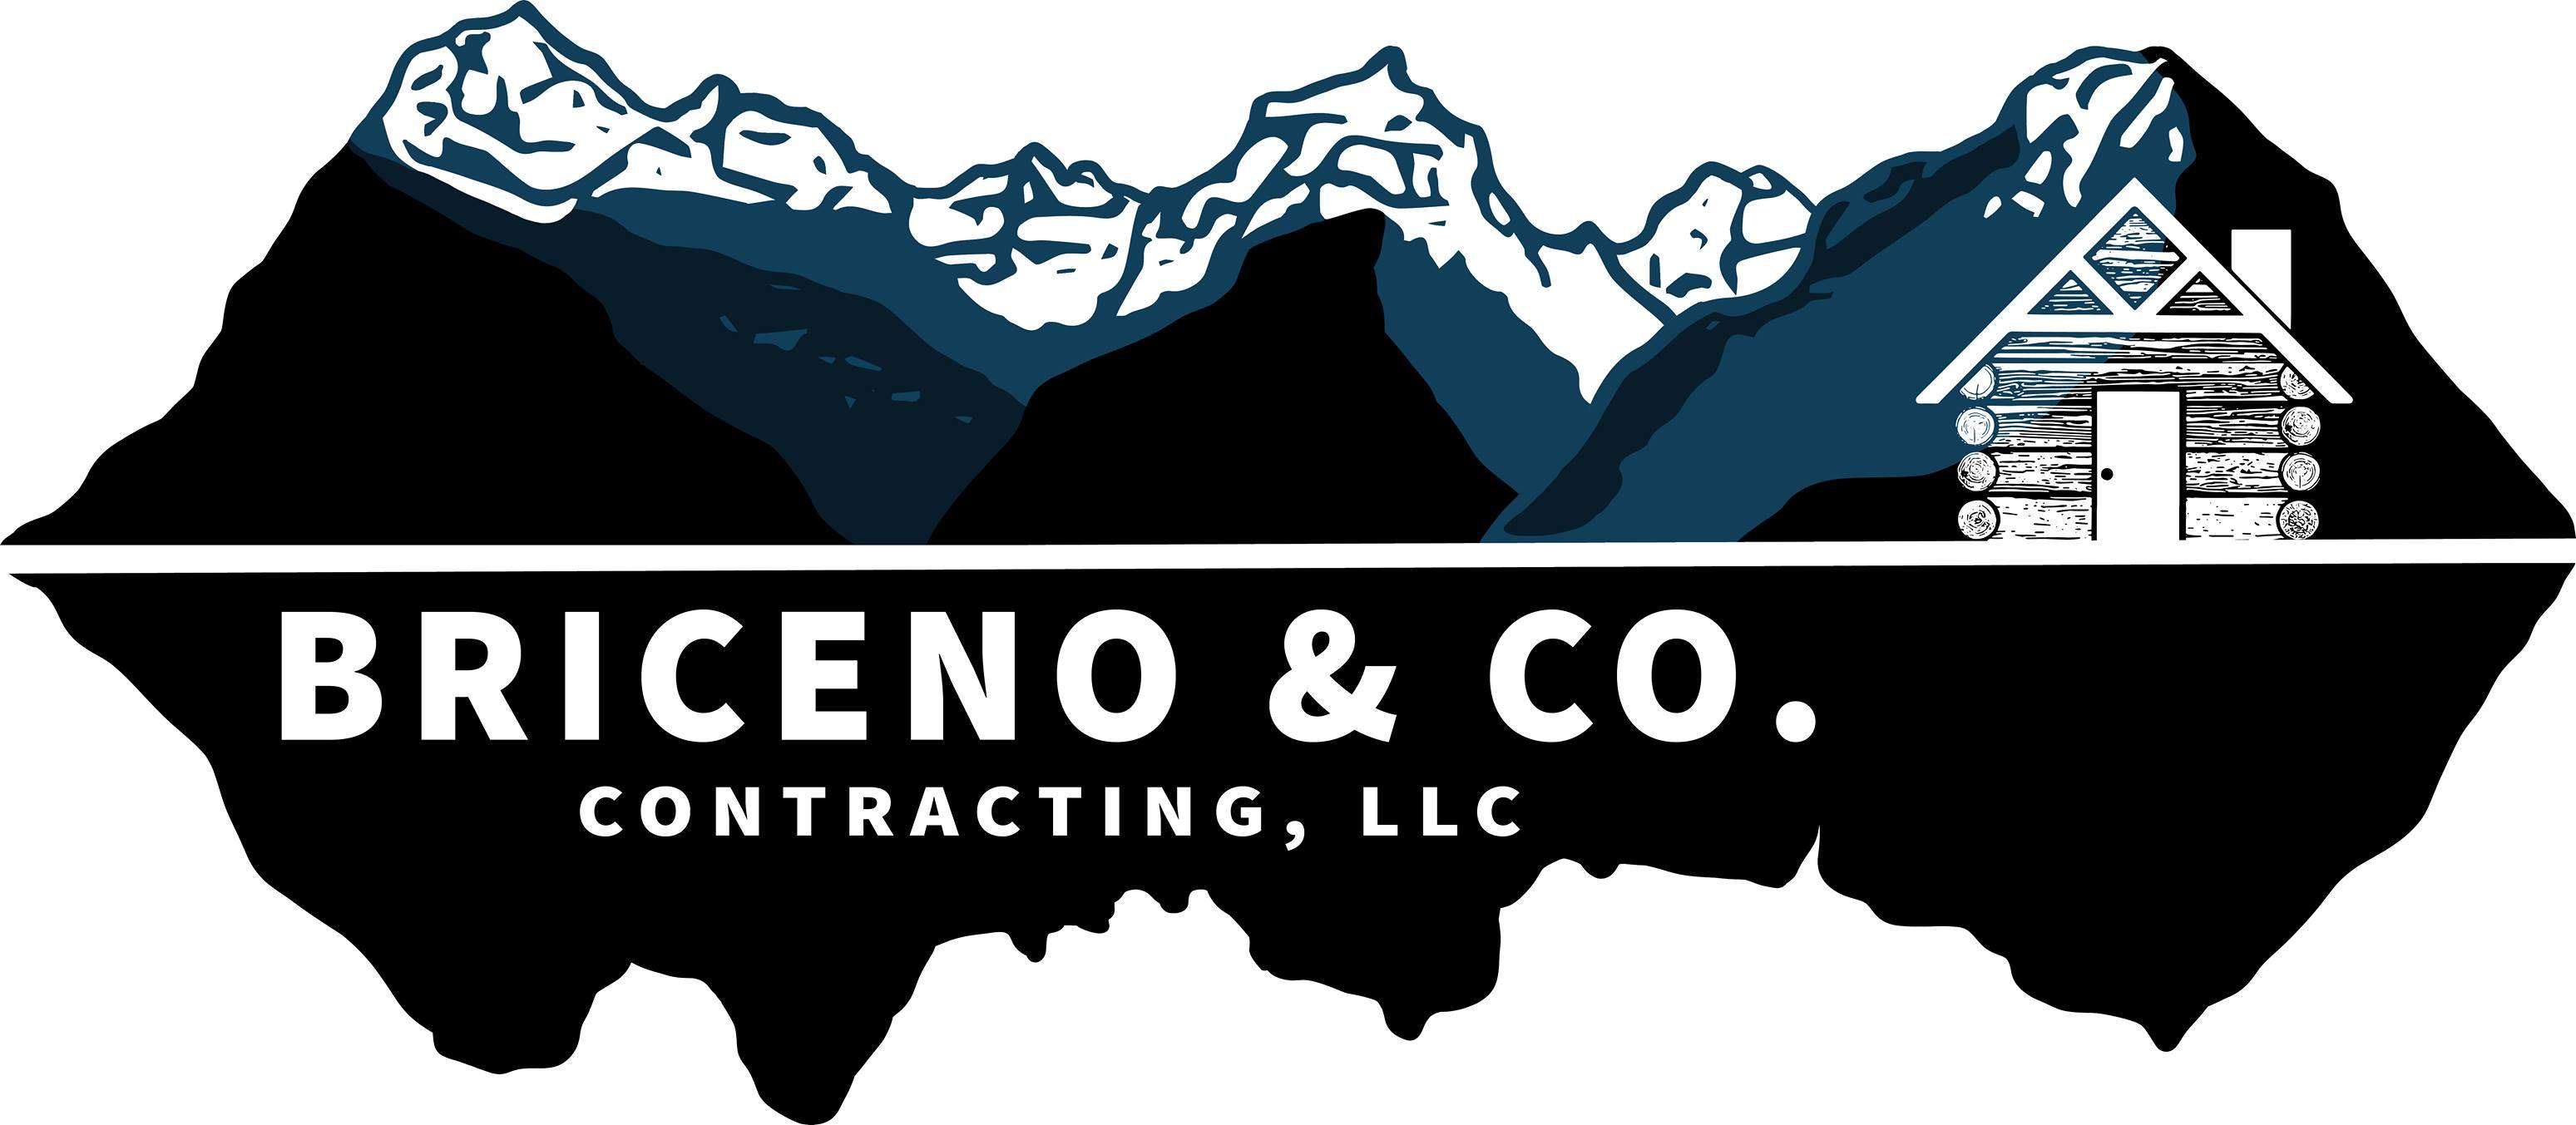 Briceno & Co. Contracting, LLC Logo